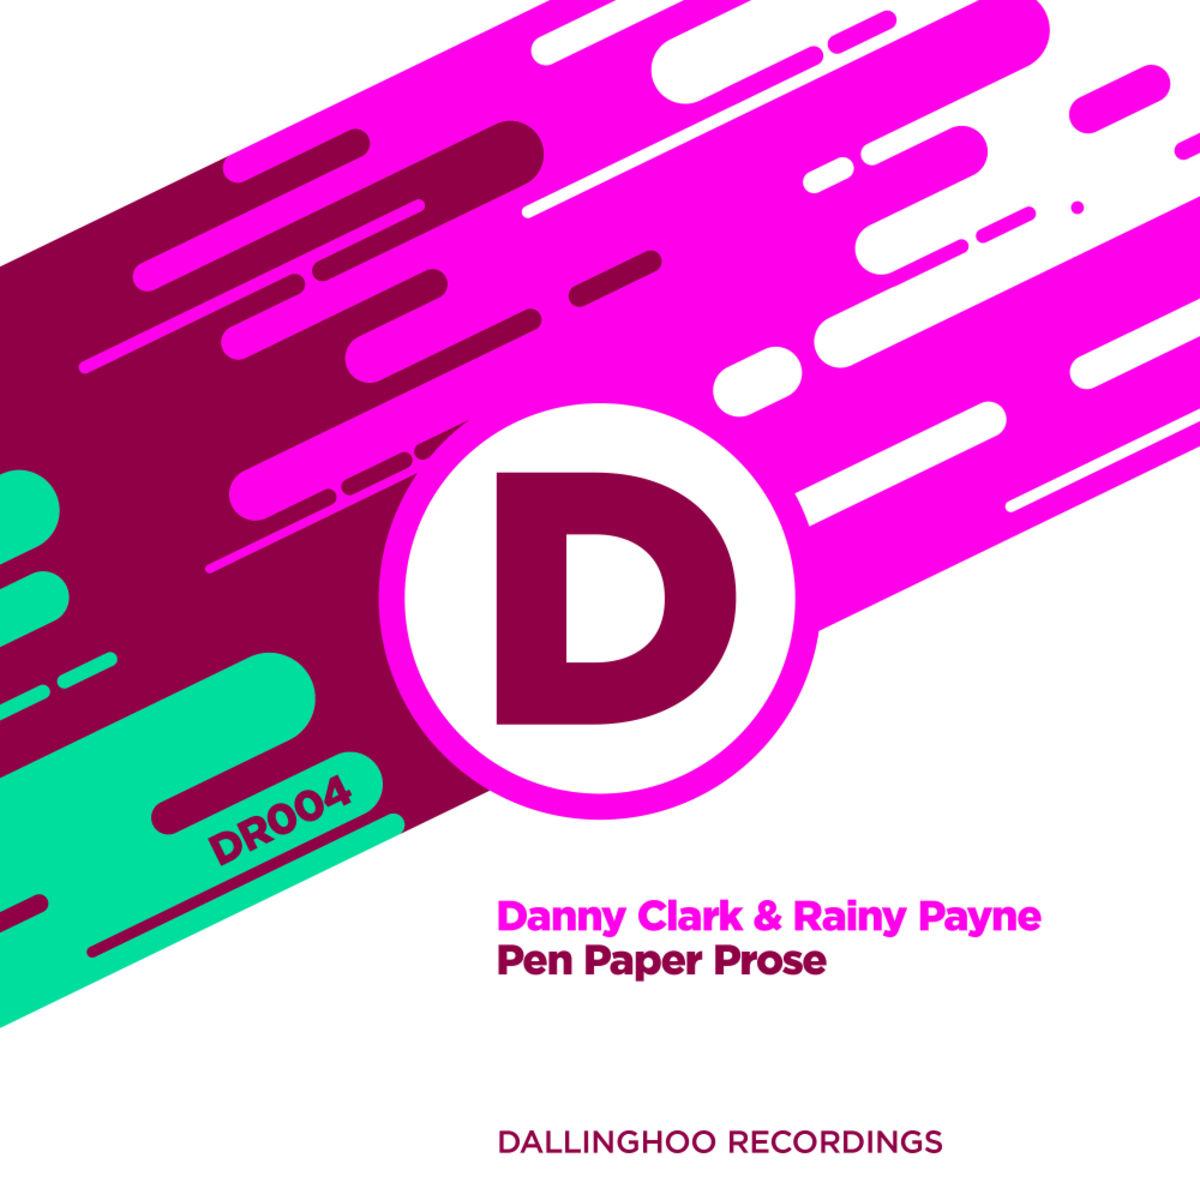 Danny Clark & Rainy Payne - Pen Paper Prose / Dallinghoo Recordings